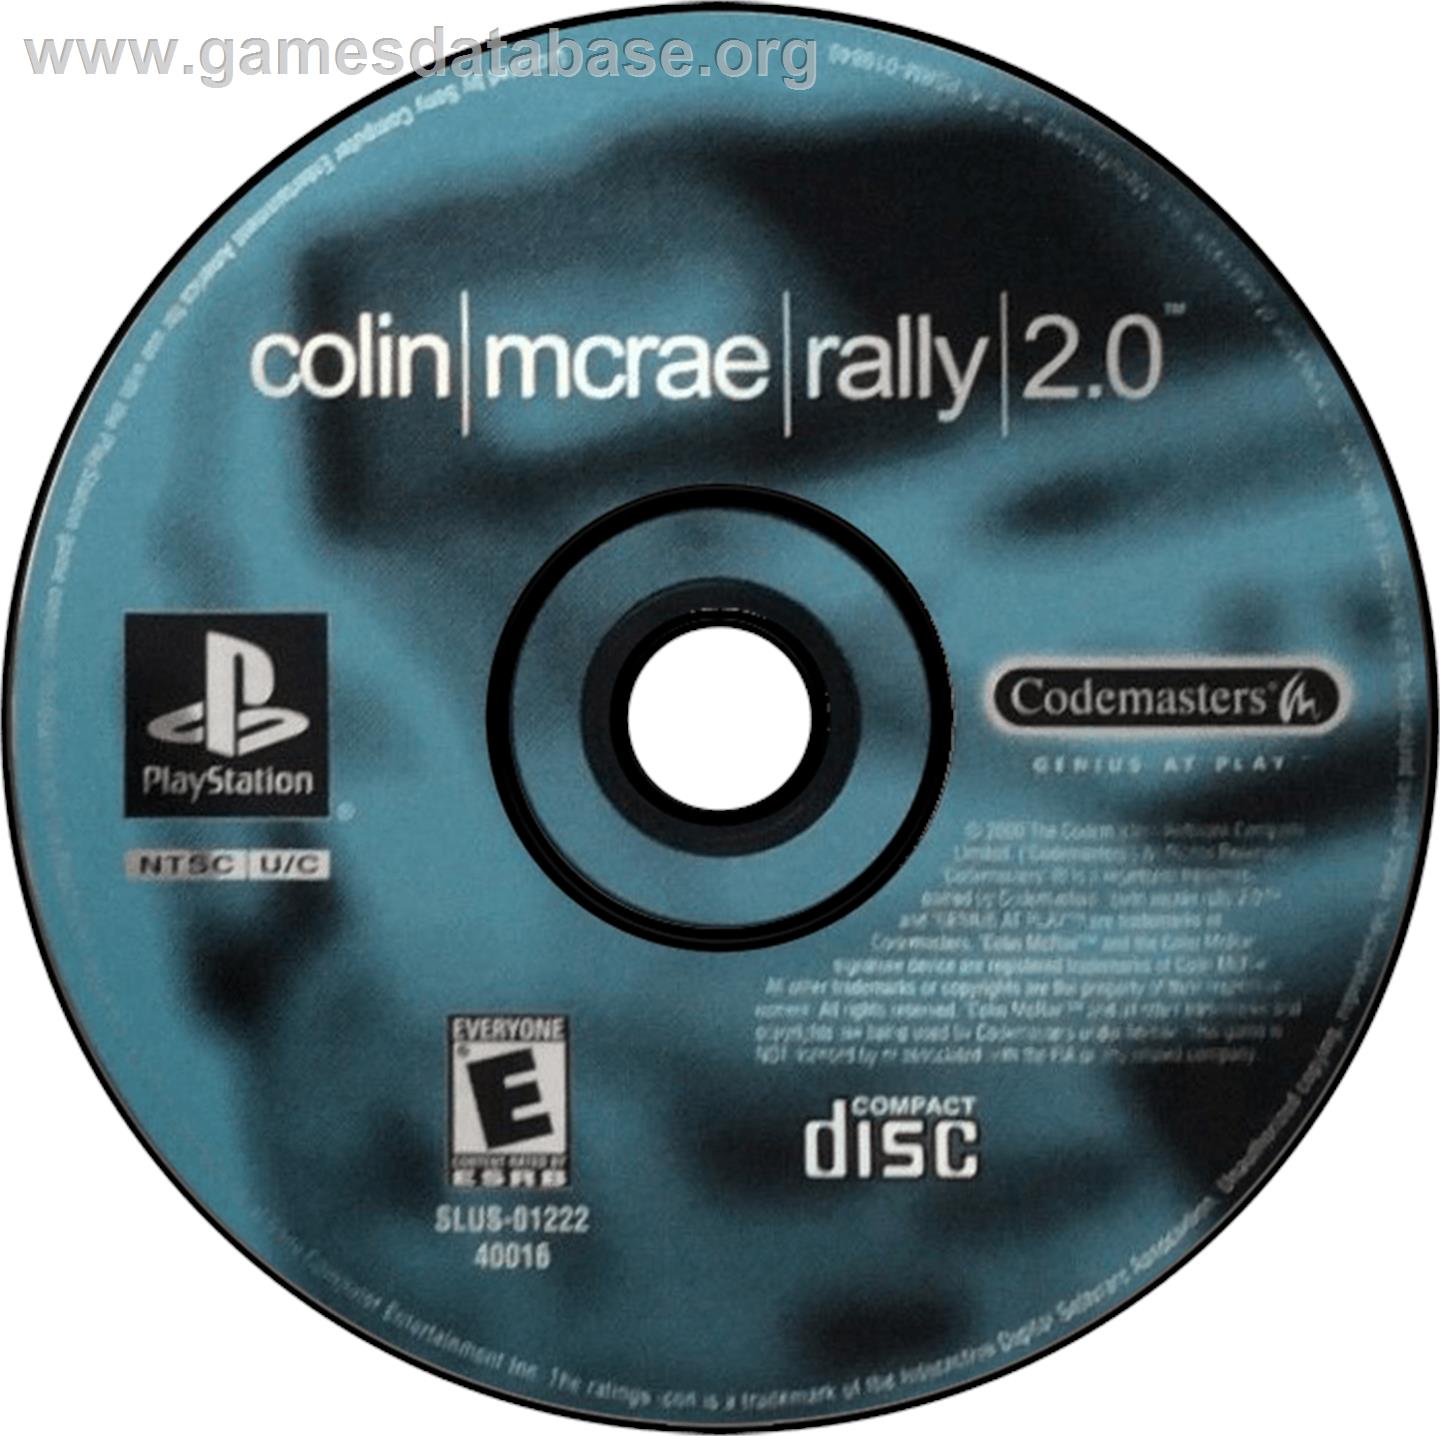 Colin McRae Rally 2.0 / No Fear Downhill Mountain Biking - Sony Playstation - Artwork - Disc